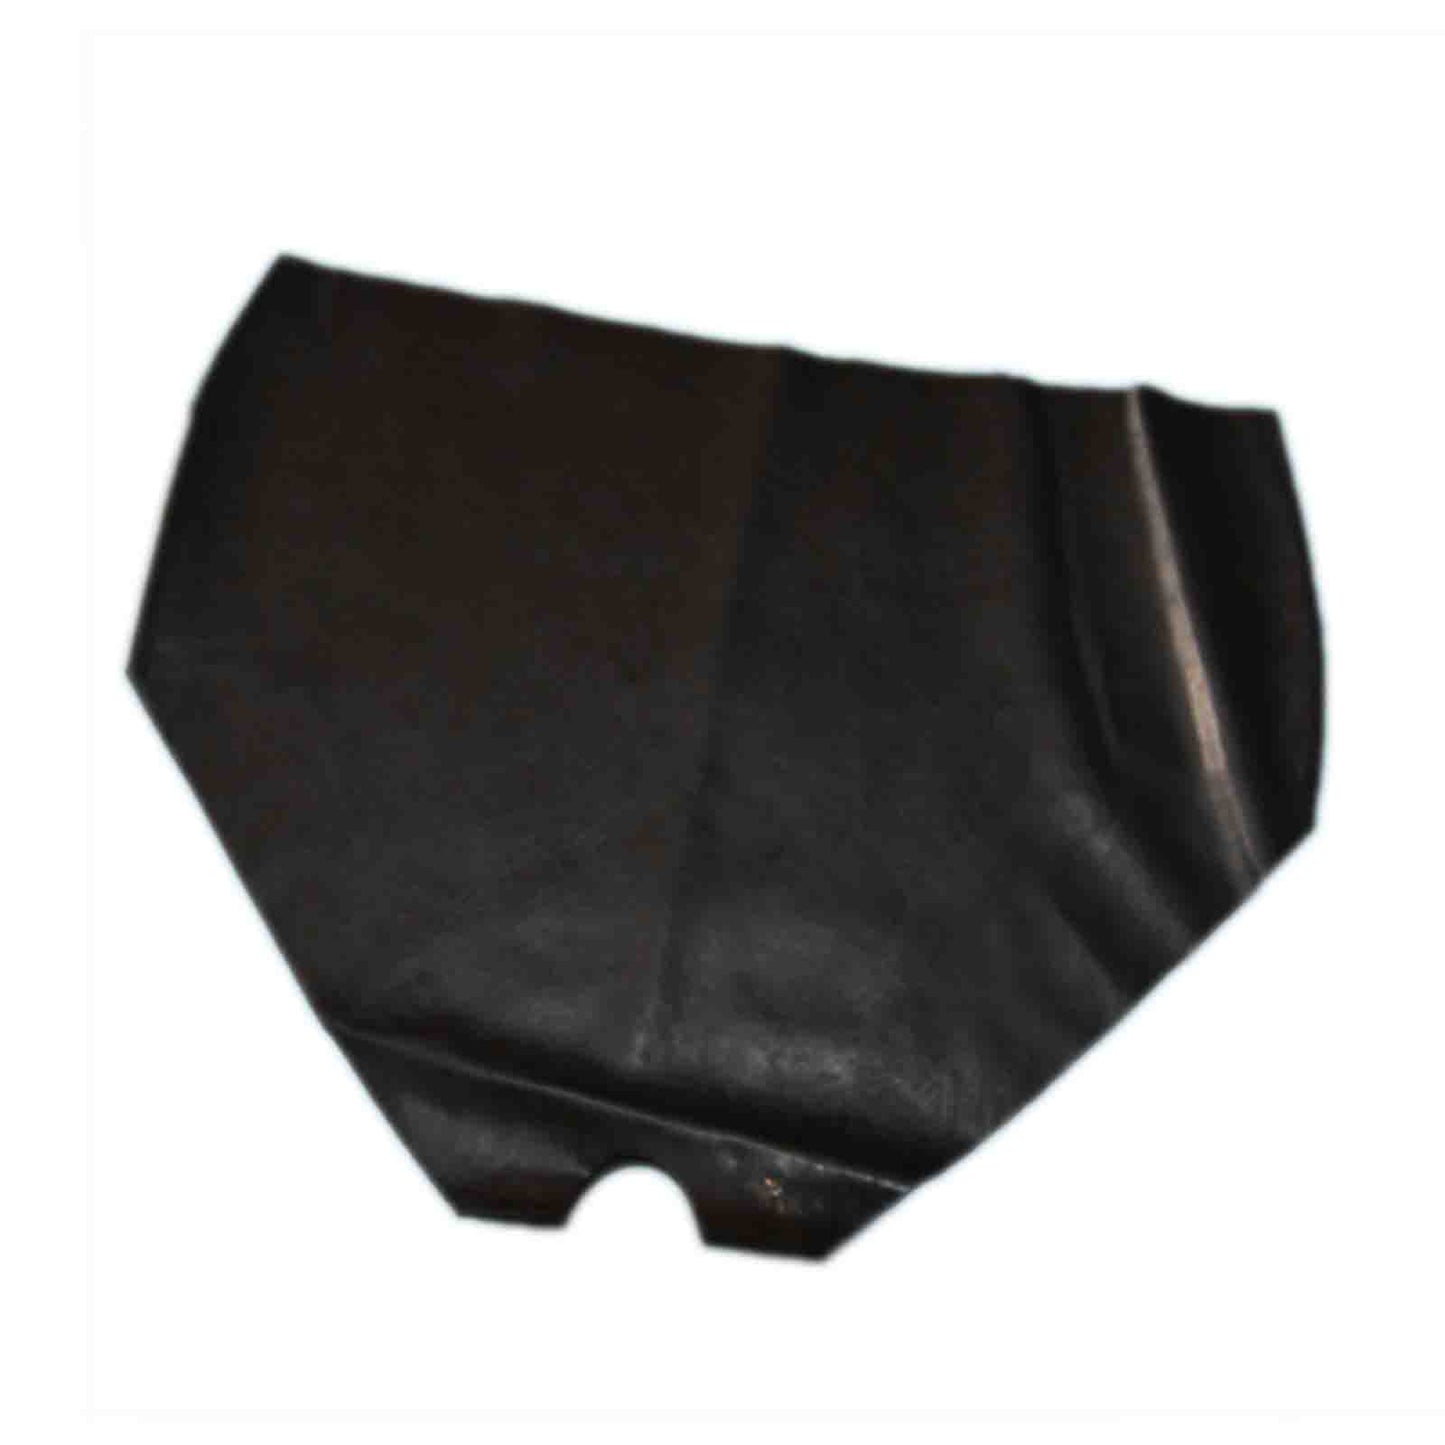 MONNIK Latex Lingerie Seamless Briefs Panties Tight Underwear Bottom Open for Catsuit